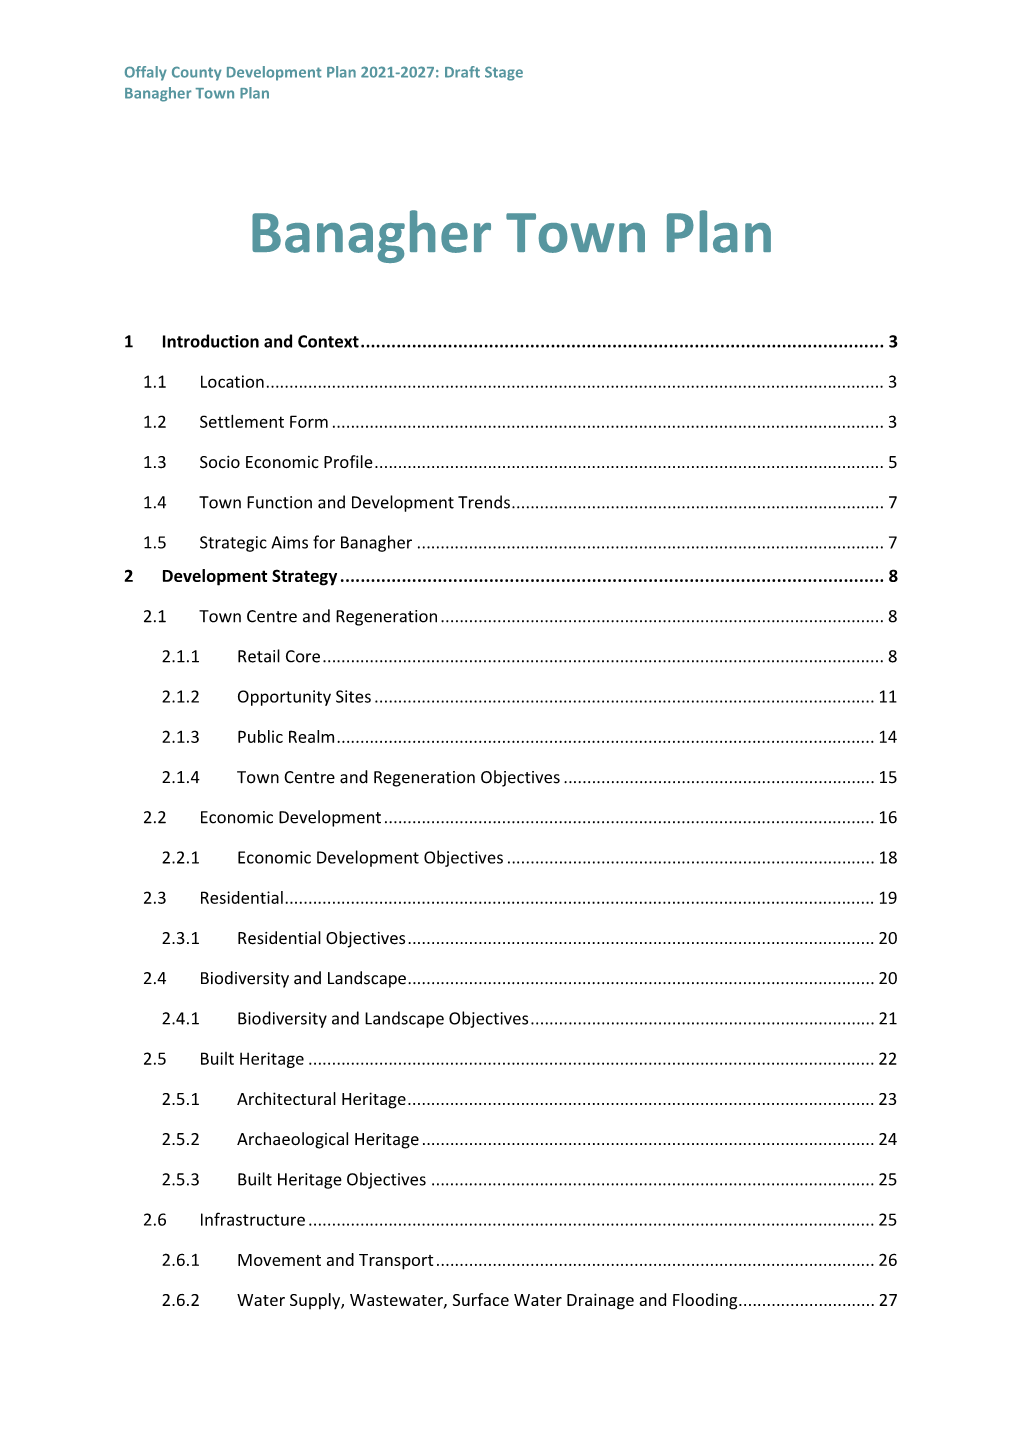 Banagher Town Plan